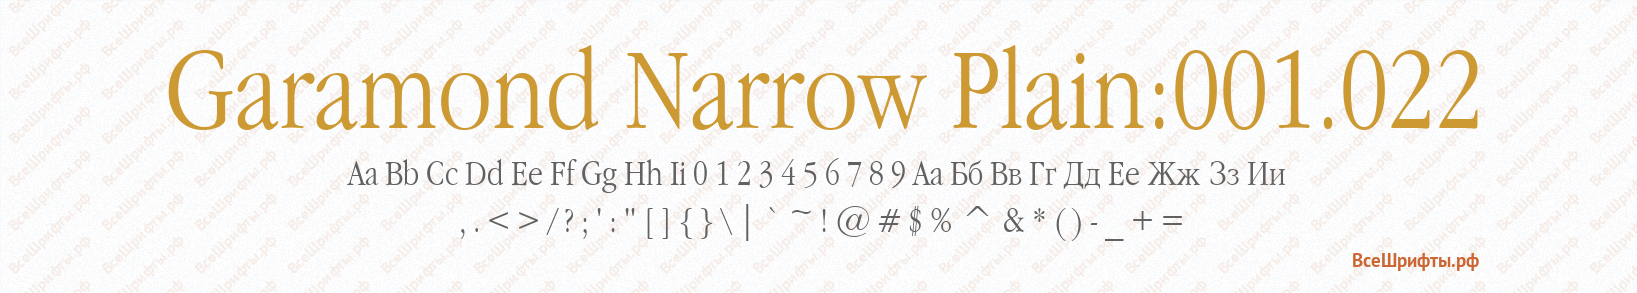 Шрифт Garamond Narrow Plain:001.022